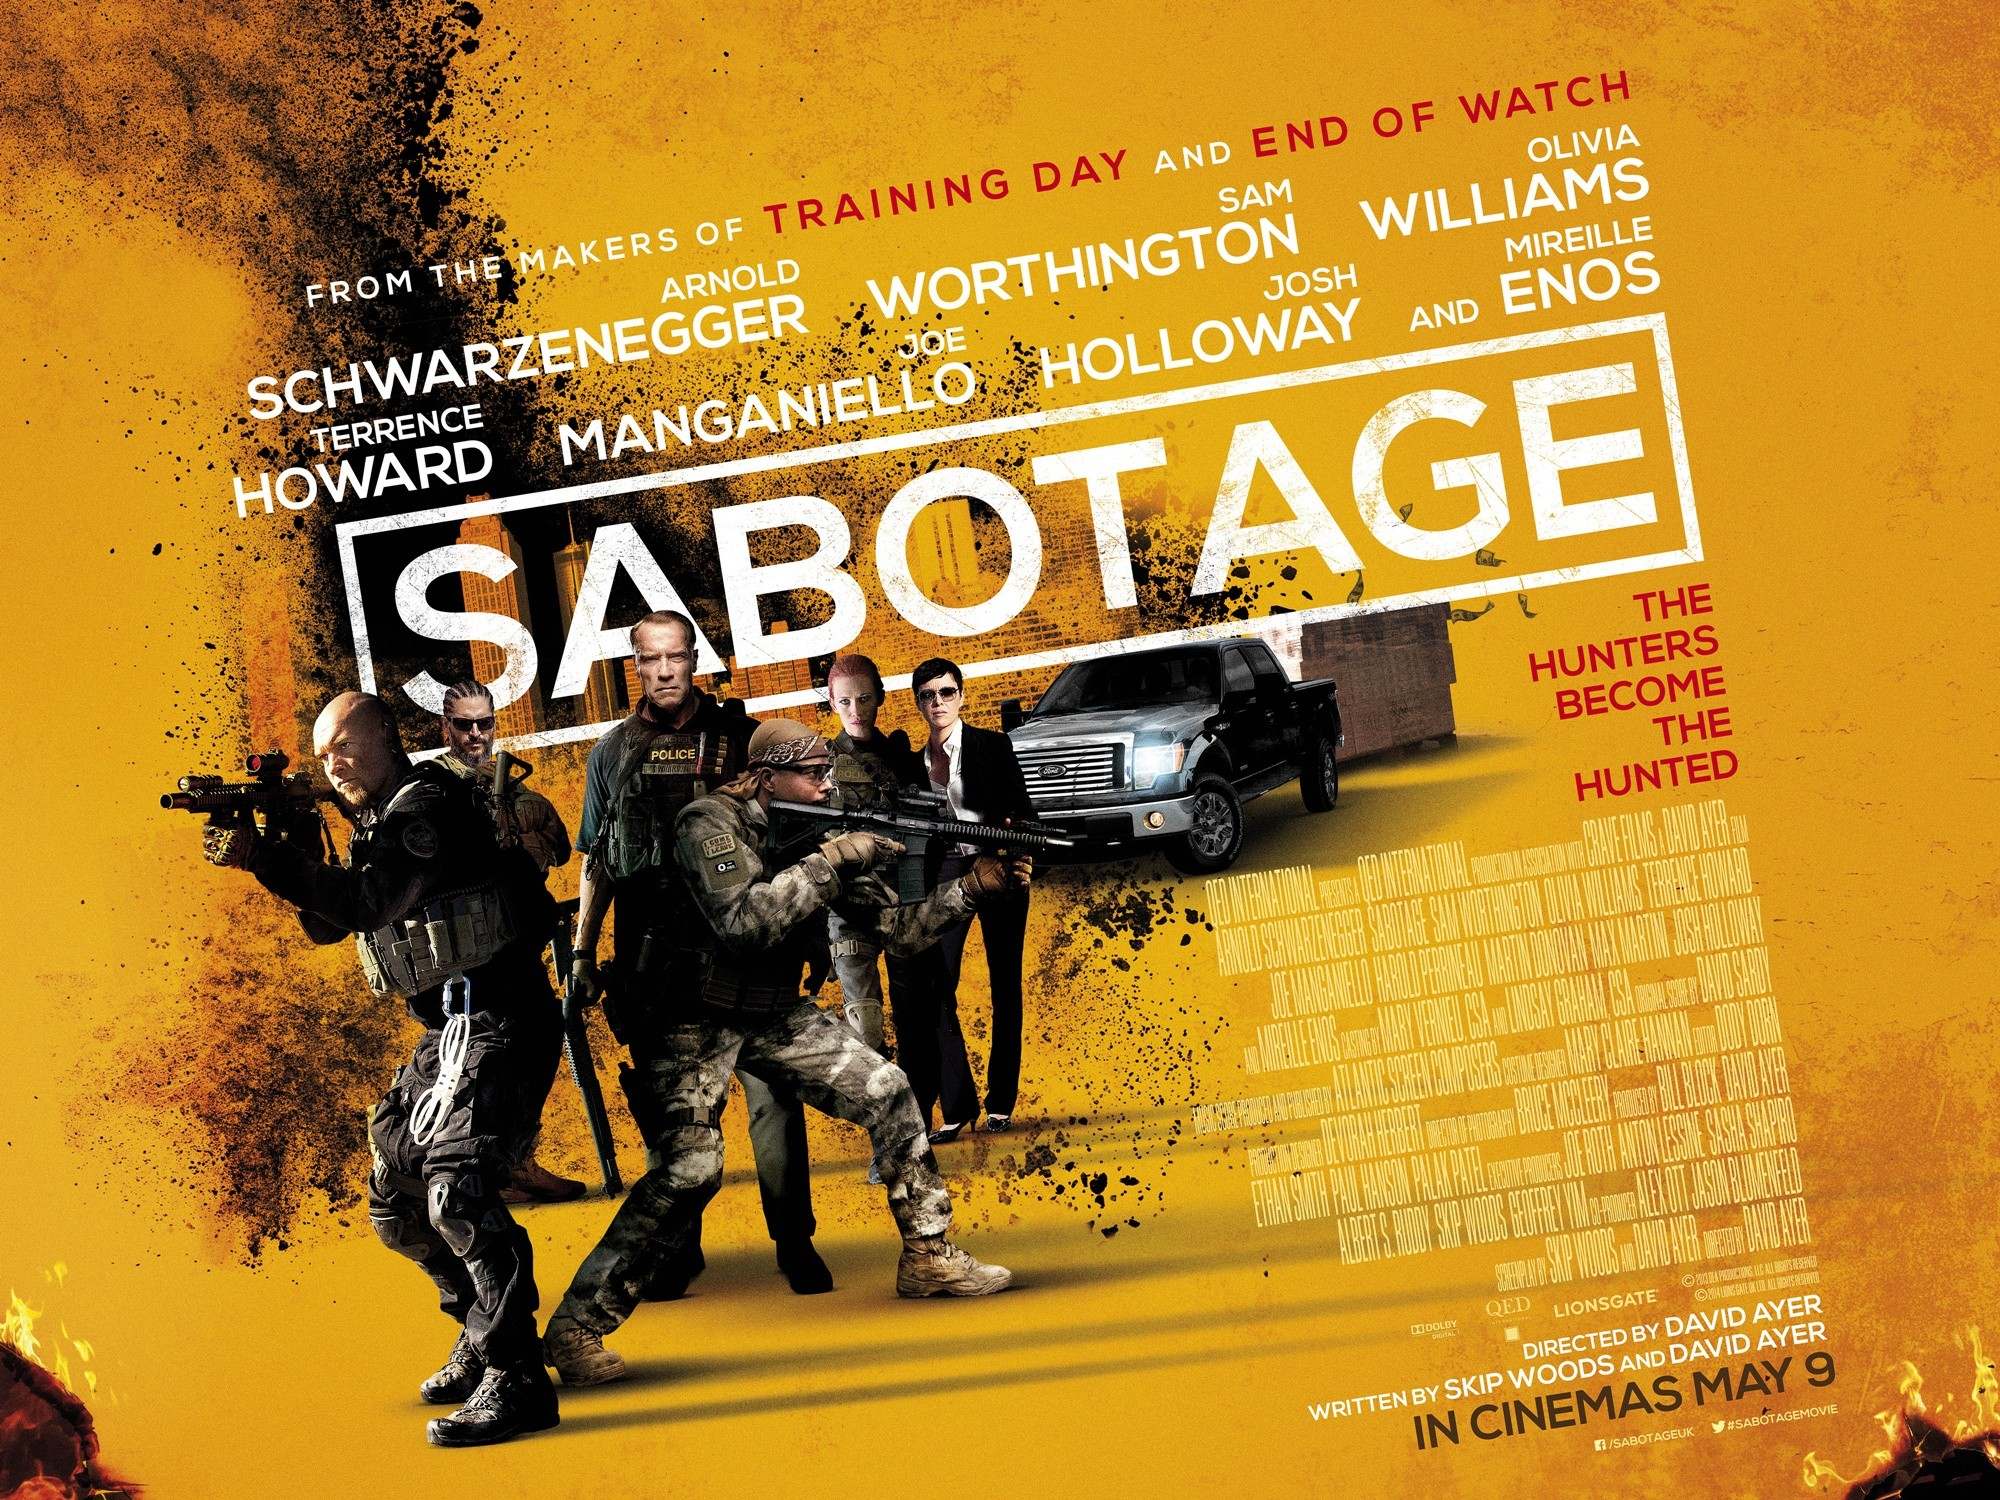 Poster of Open Road Films' Sabotage (2014)